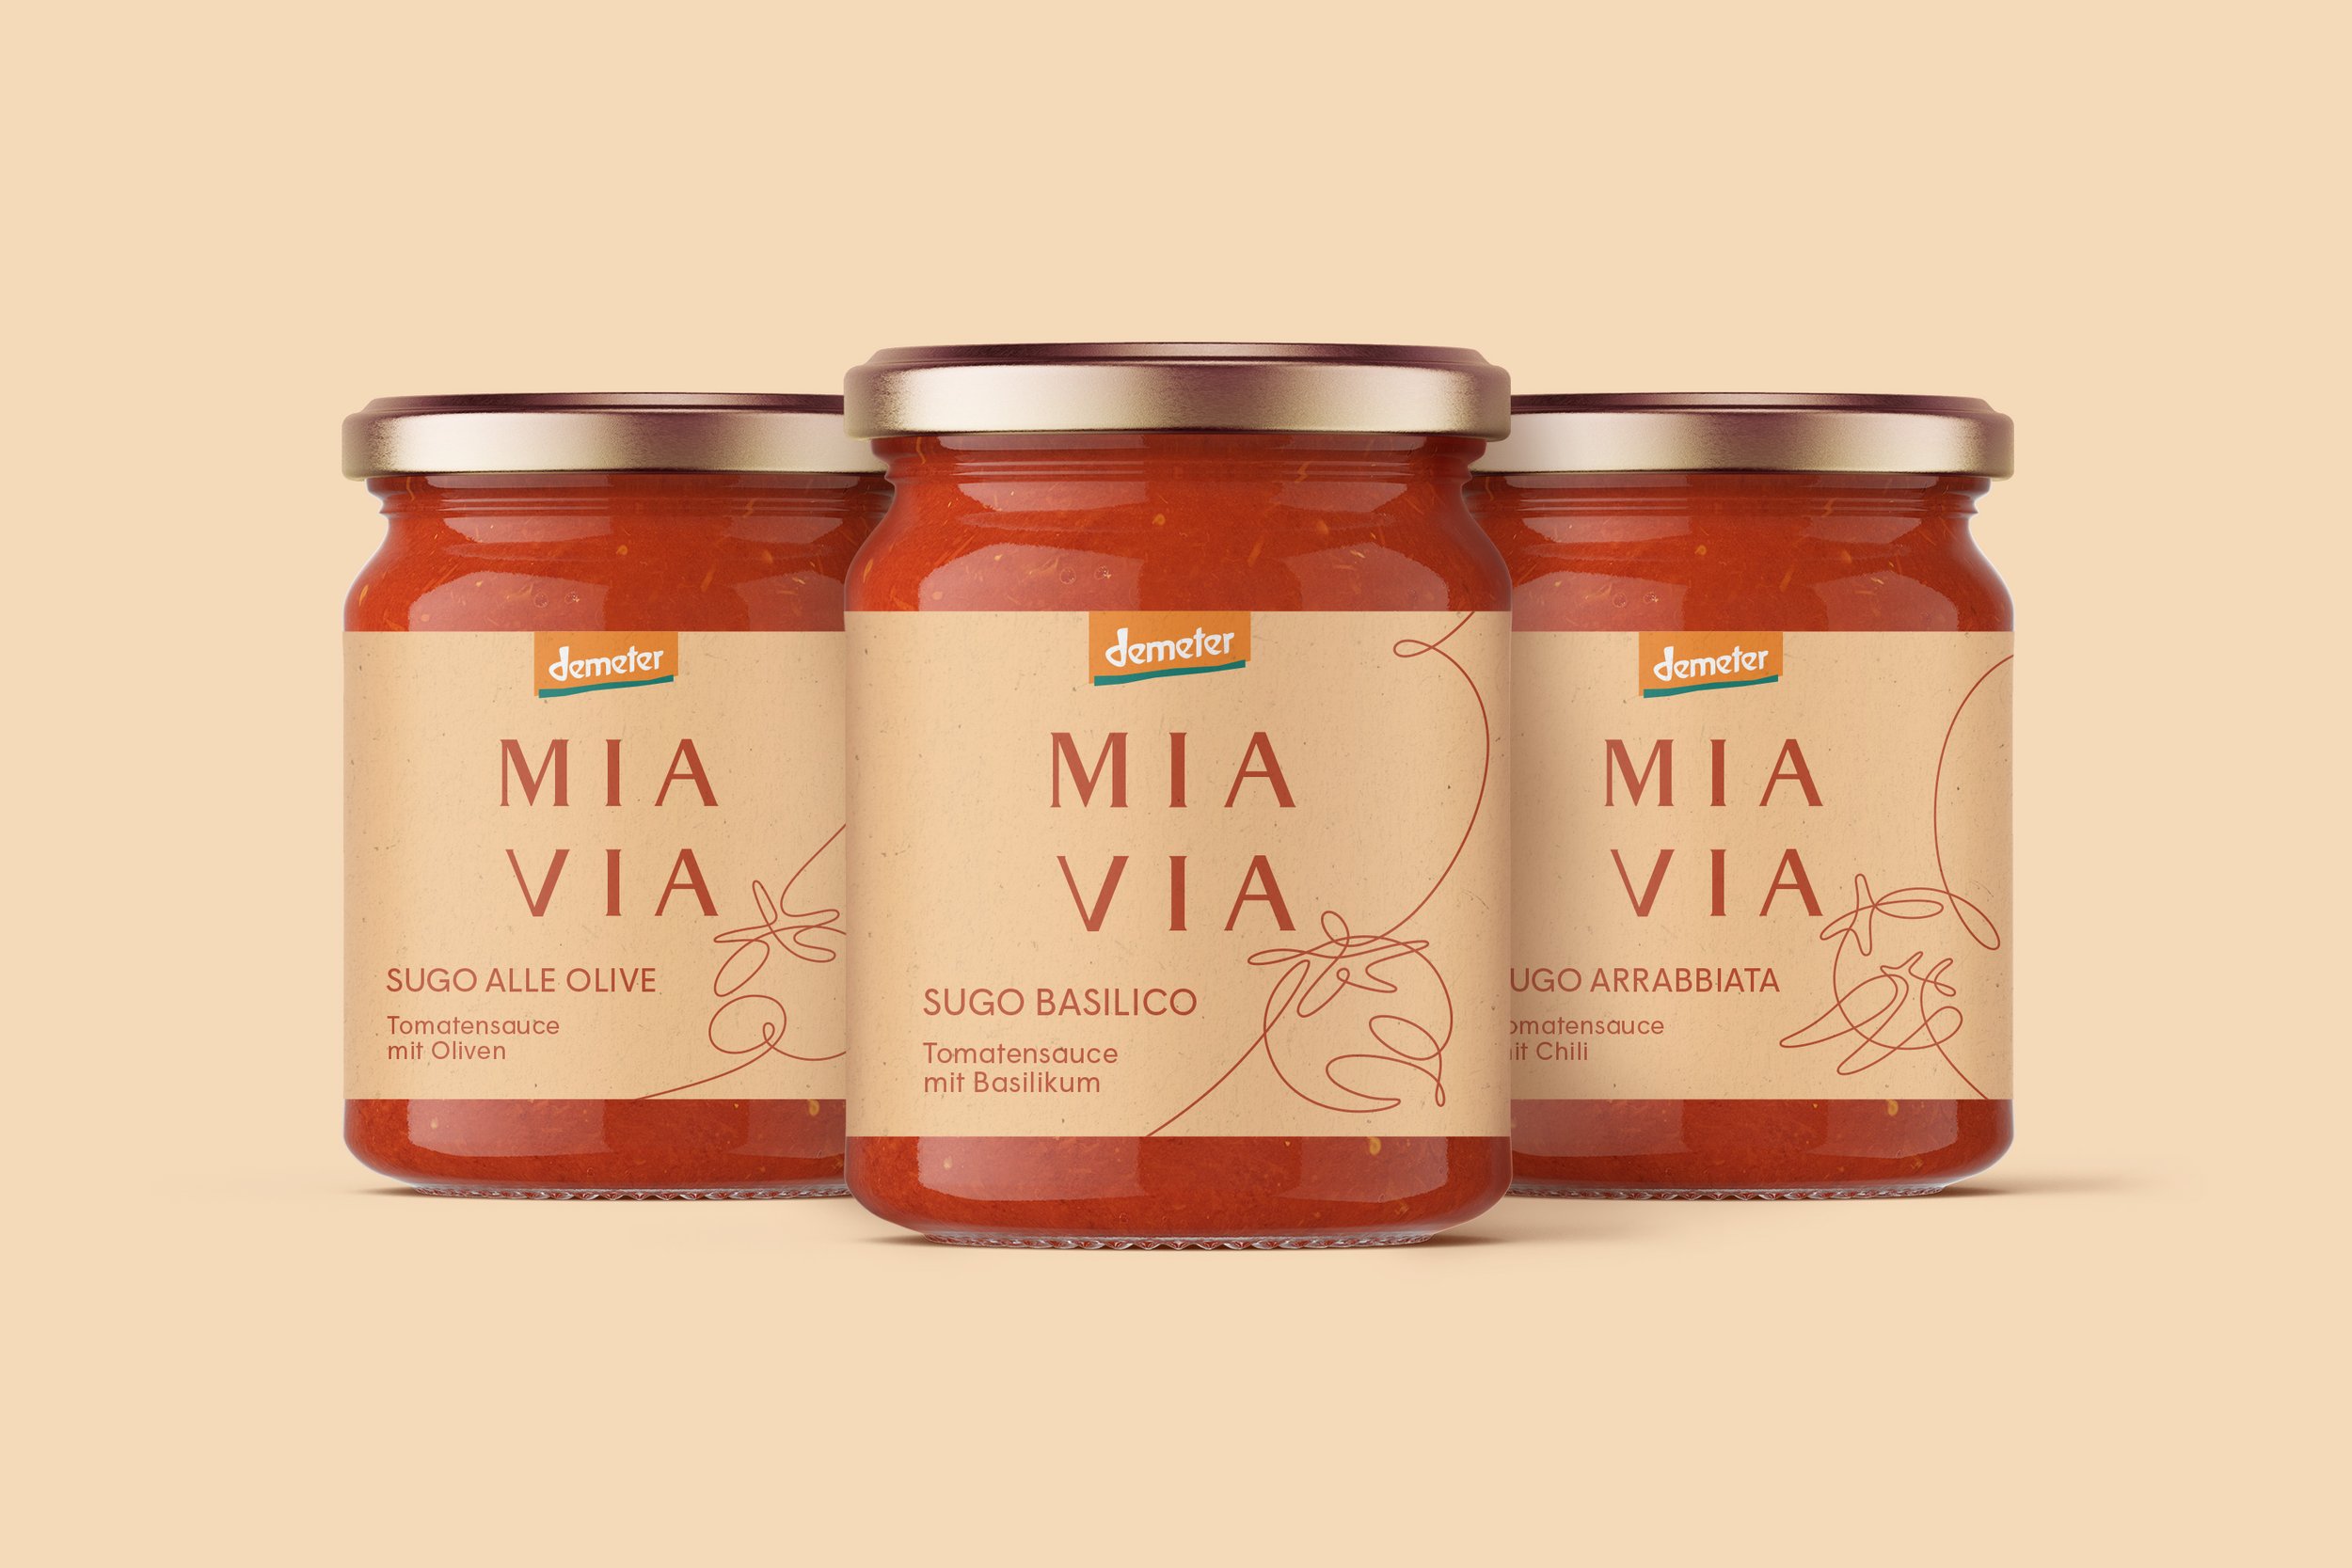 mia-via-tomato-sauces-packaging-design.jpg